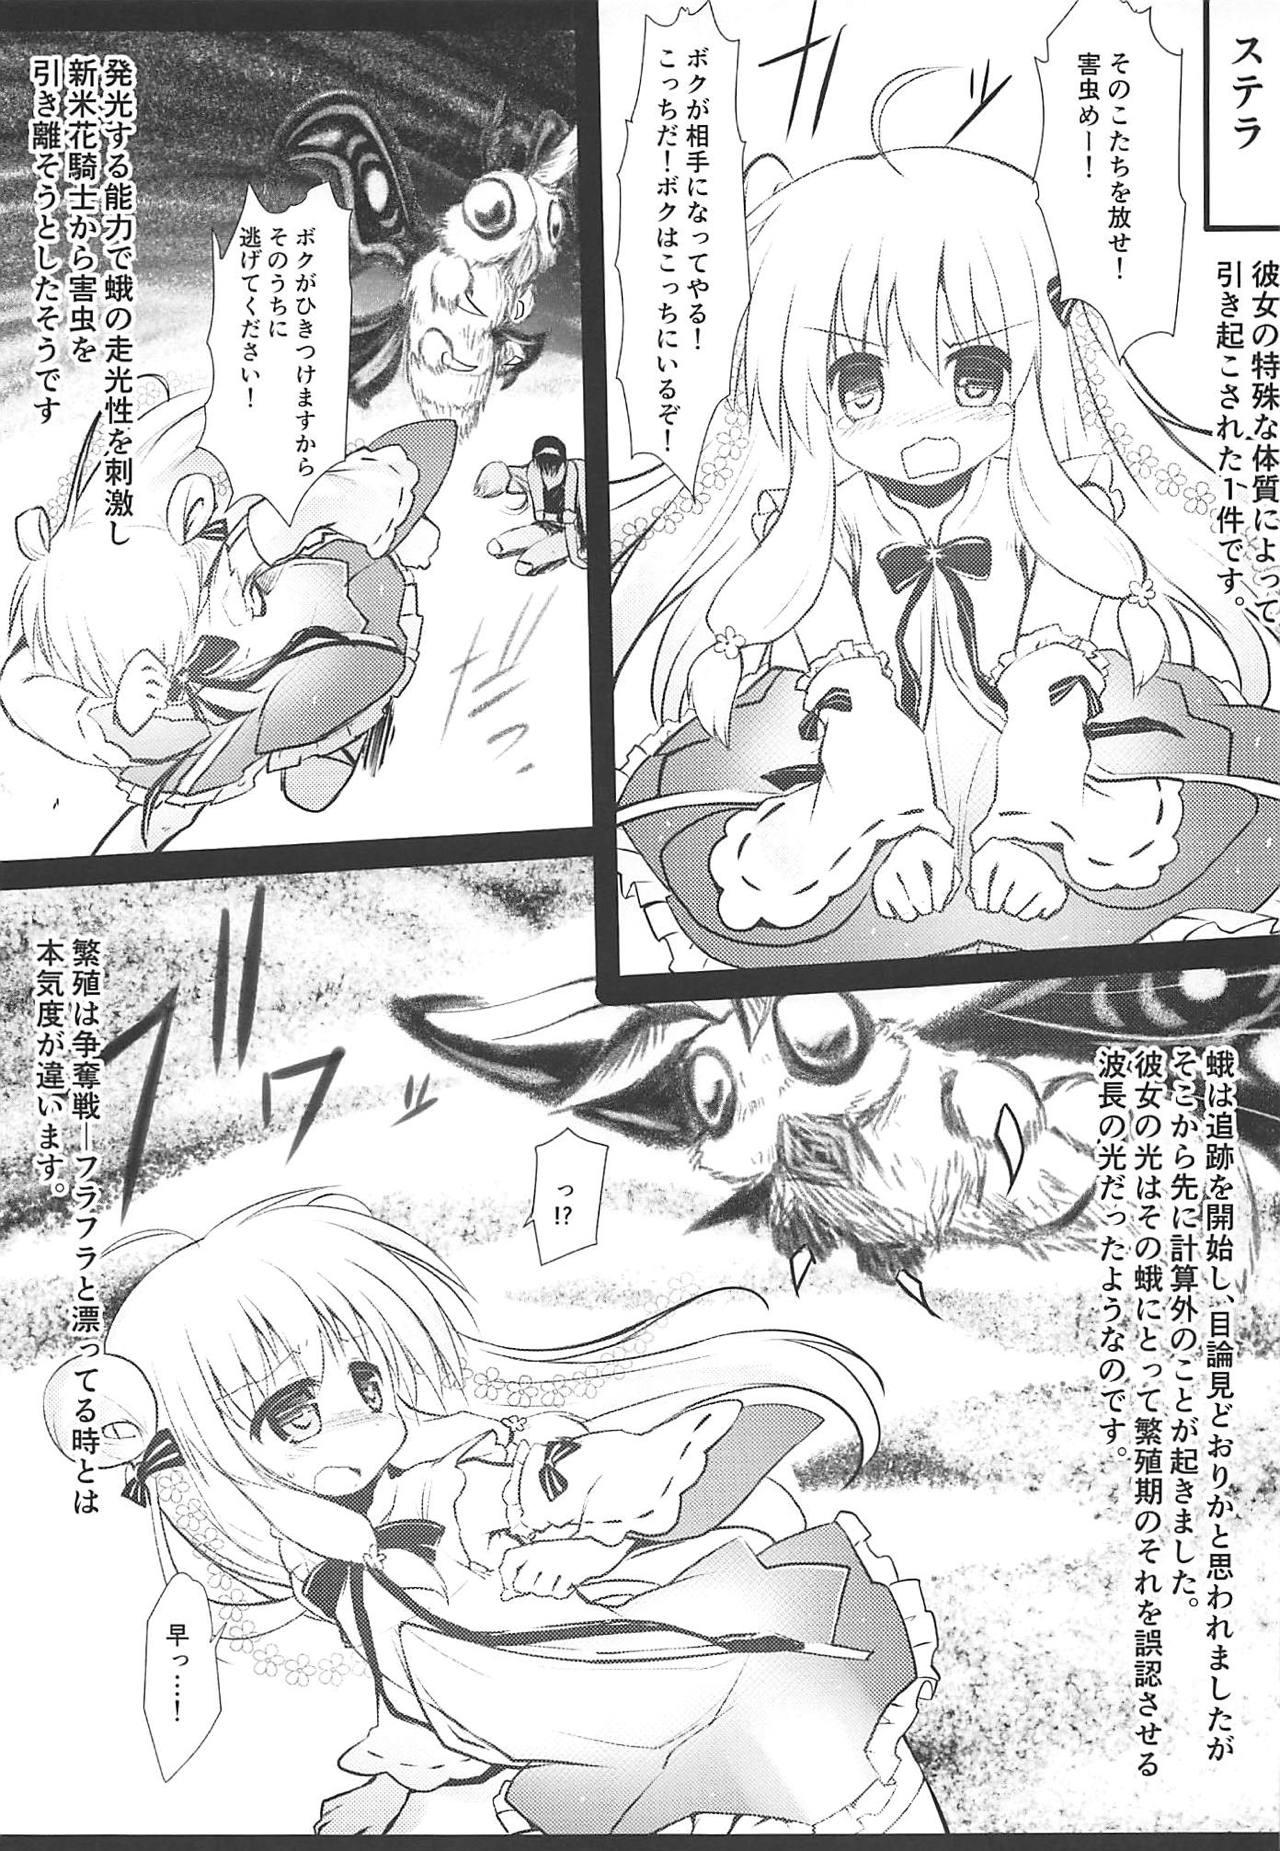 Pain Gaichuu Higai Houkokusho File 3 - Flower knight girl Young Petite Porn - Page 4